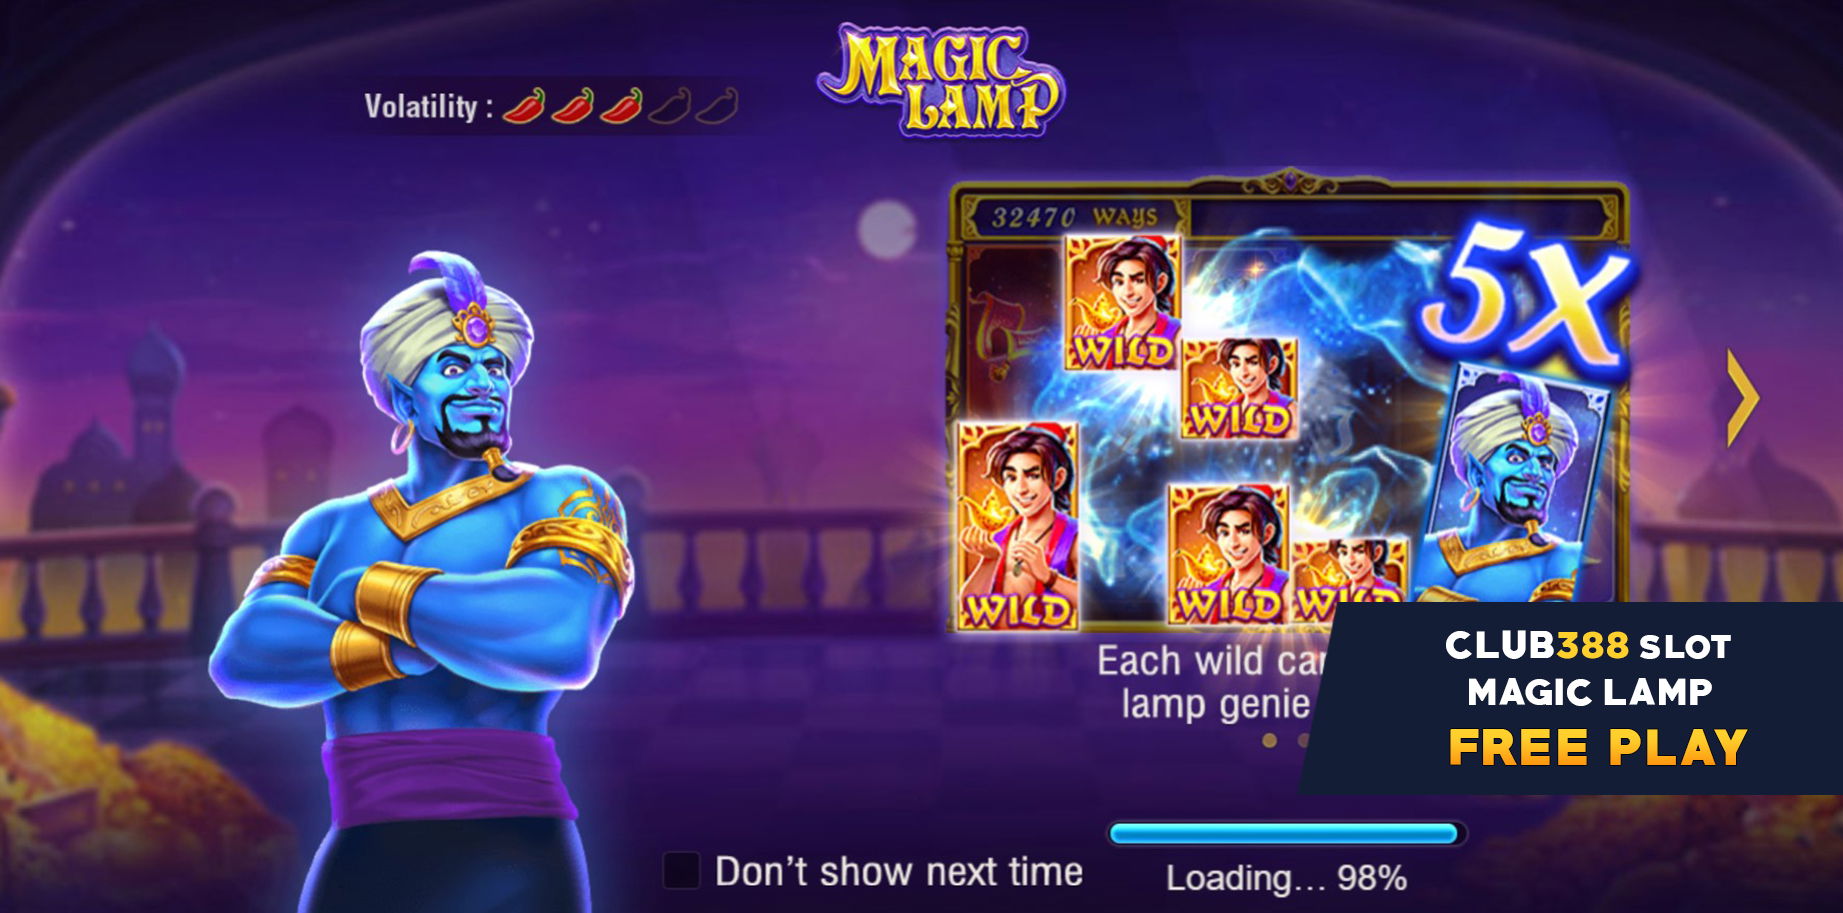 7 Magic Lamp Slot Game Jili - Club388